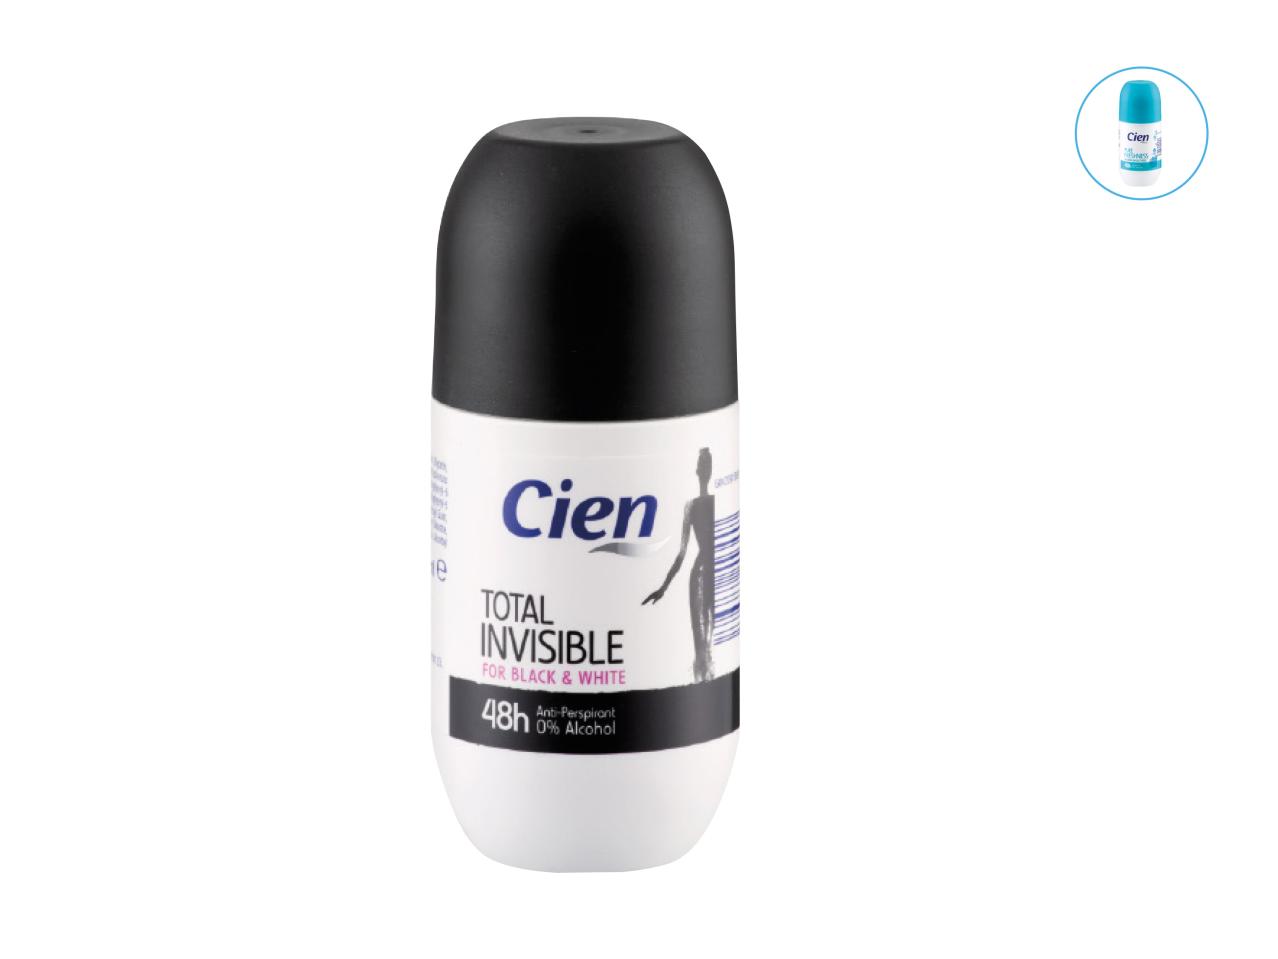 Cien Roll-On Deodorant1